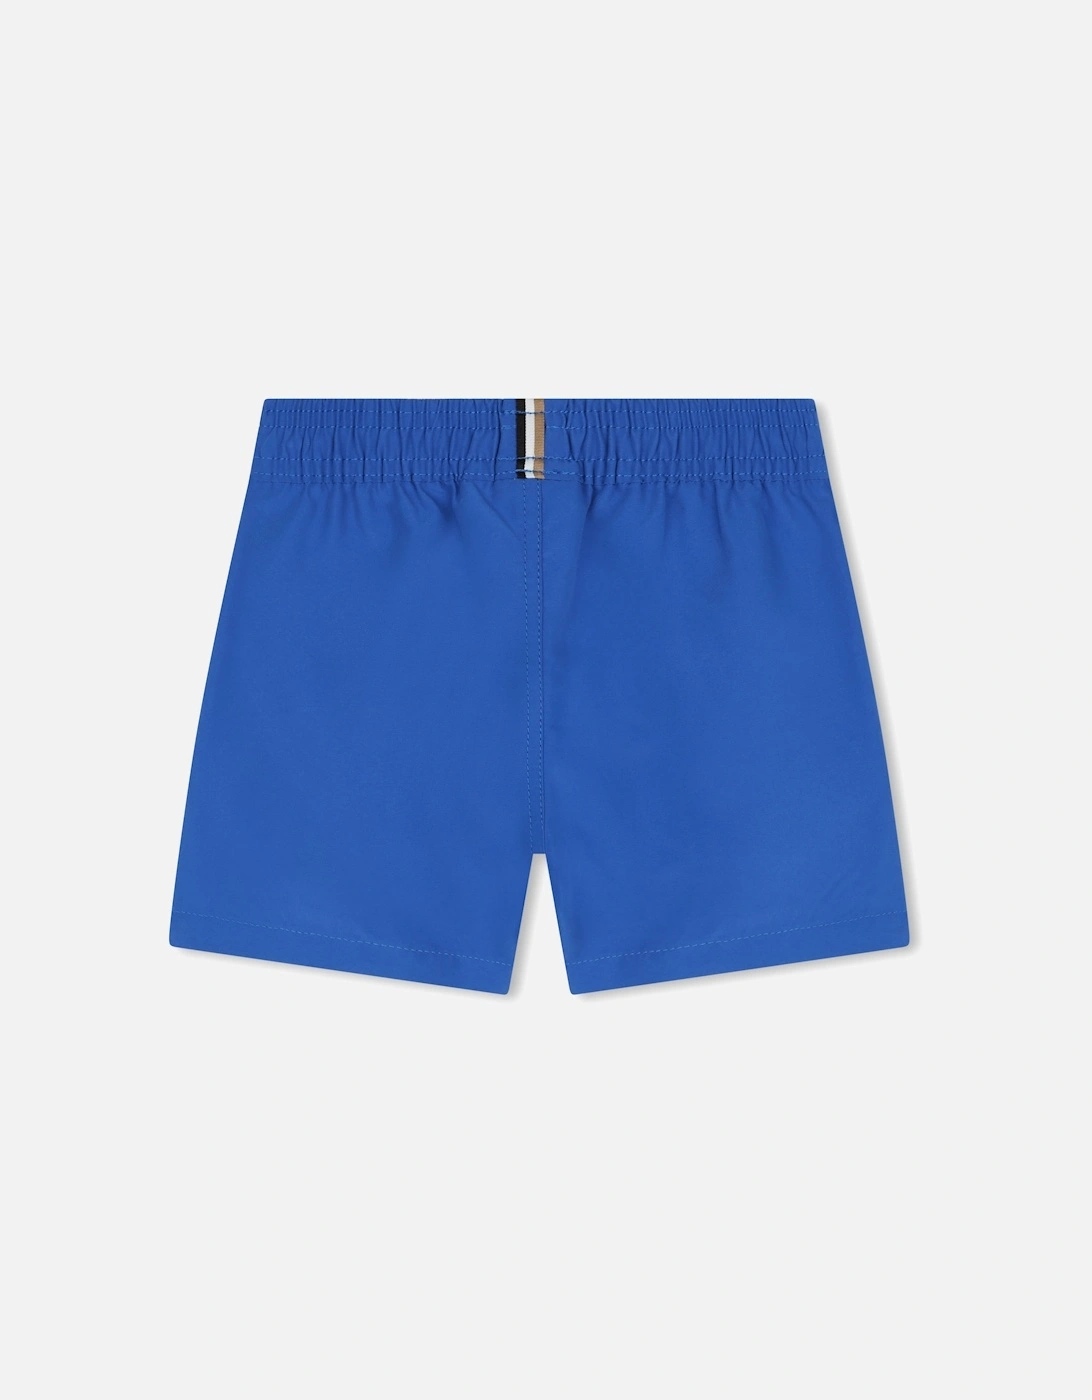 Infants Swim Shorts (Blue)